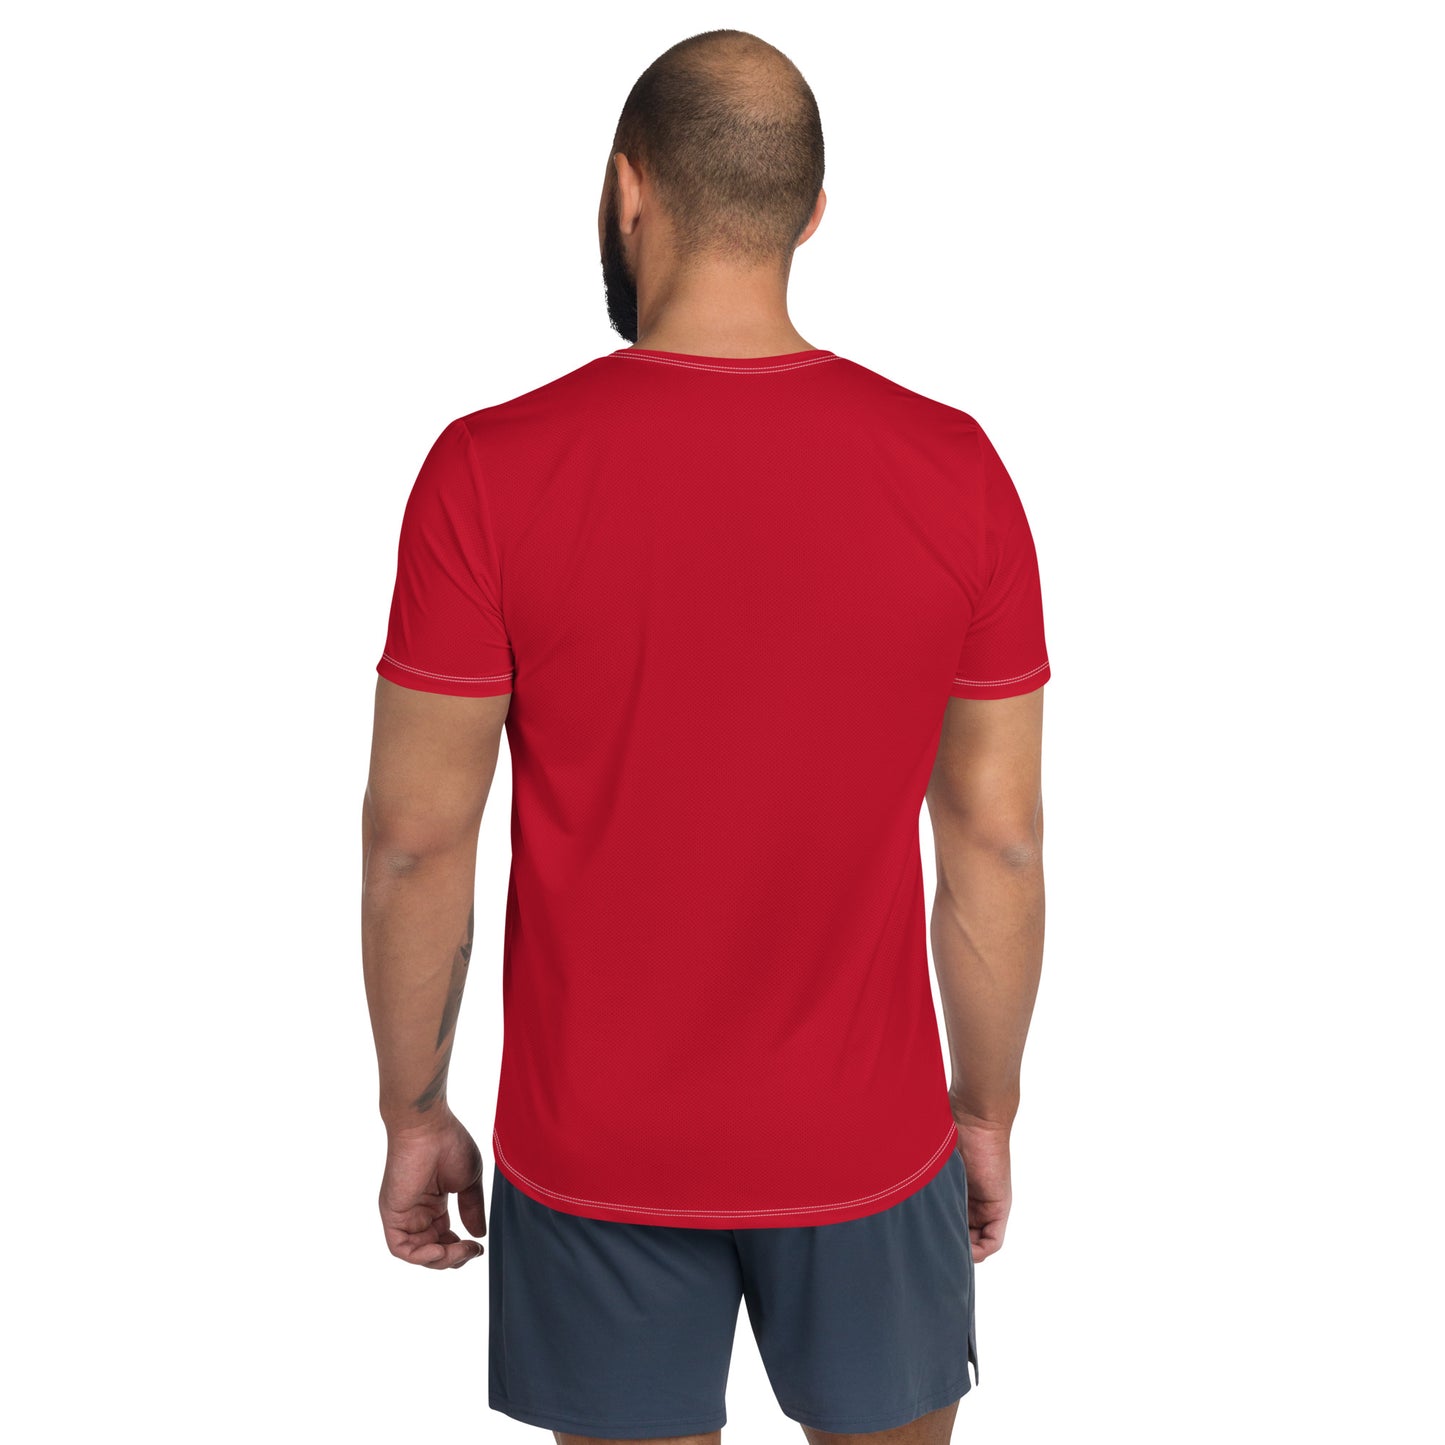 SISU Men's Athletic T-shirt